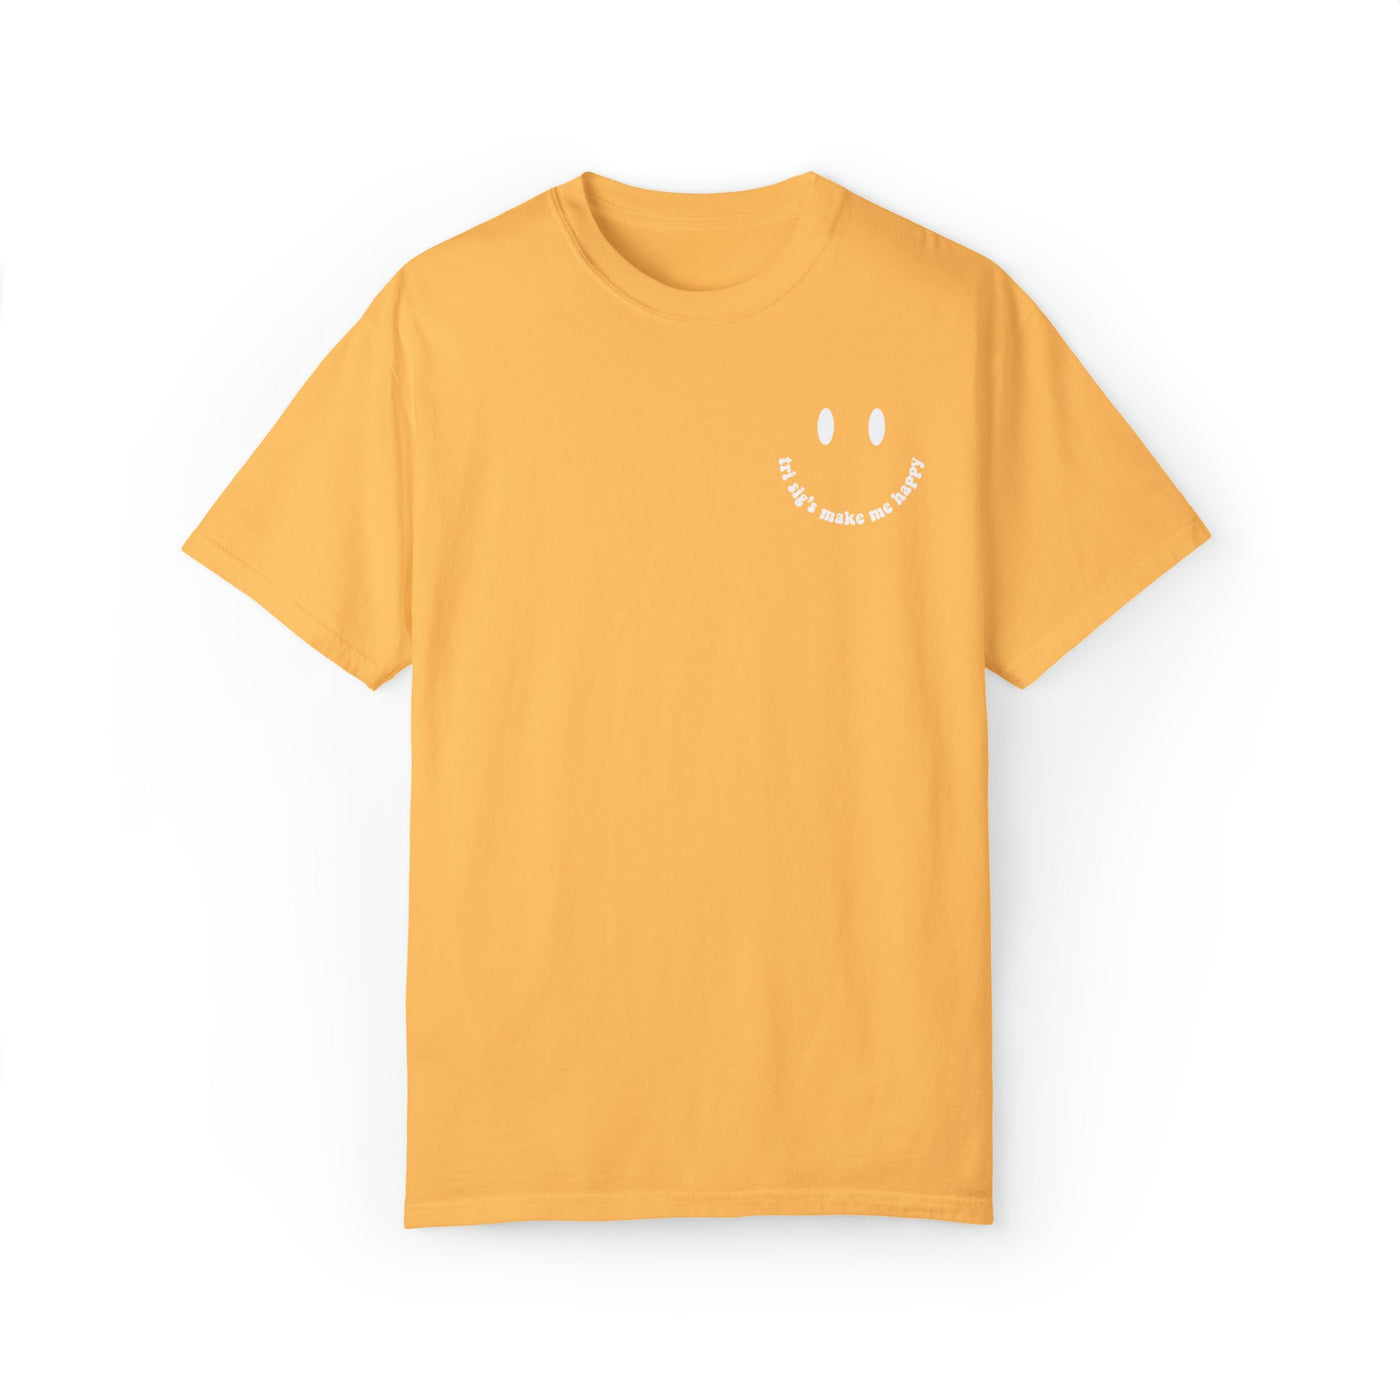 Sigma Sigma Sigma's Make Me Happy Sorority Comfy T-shirt